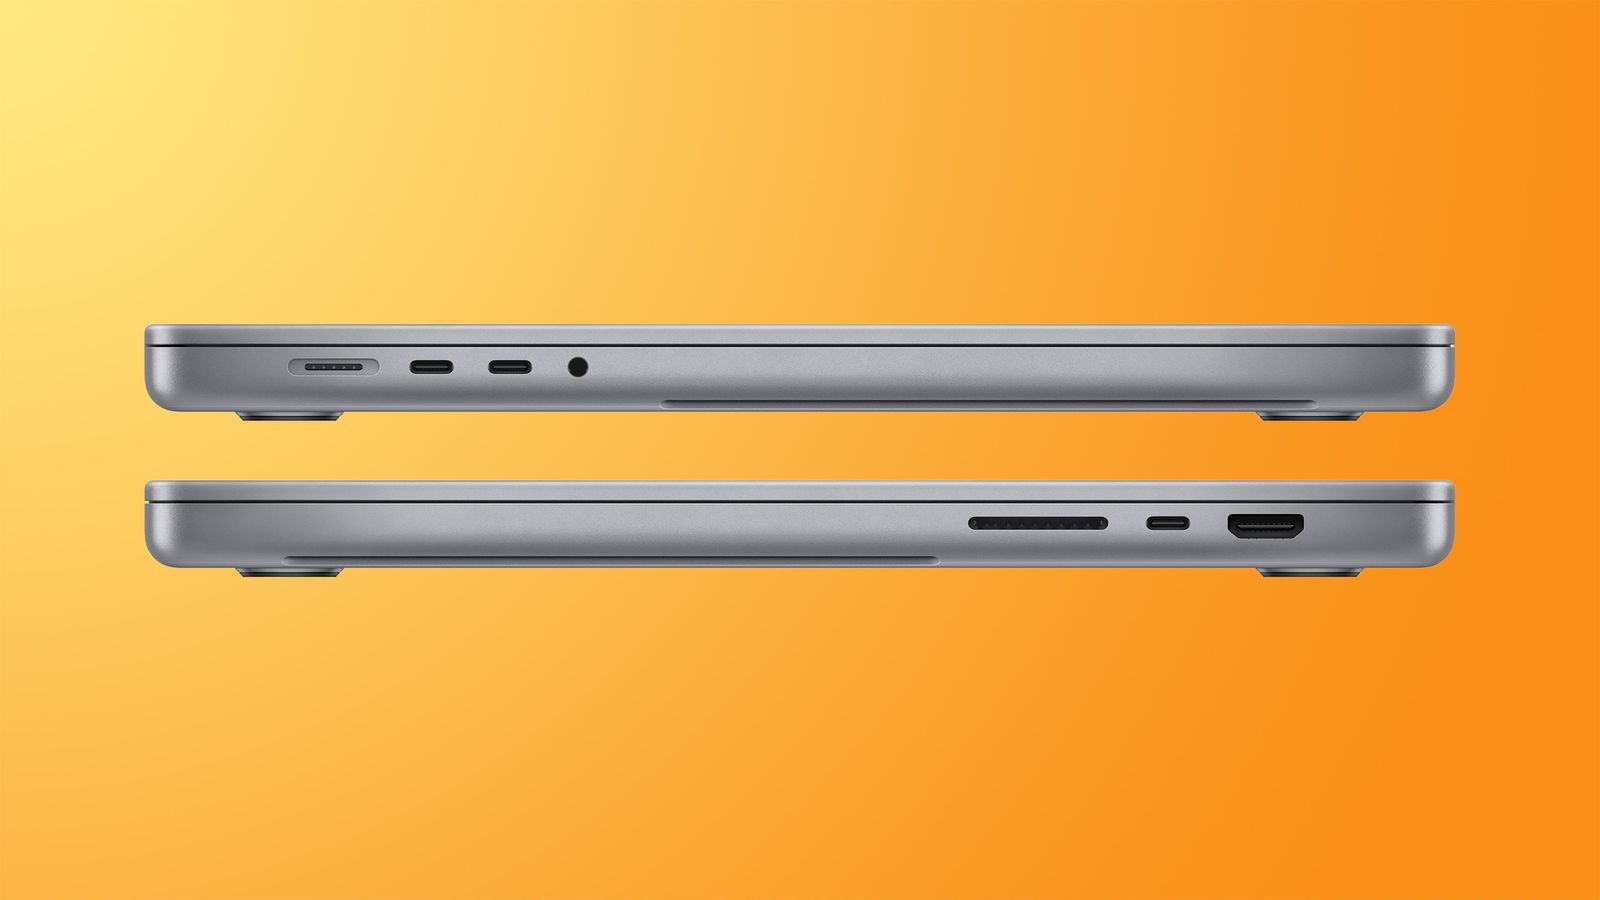 New MacBook Pro Models Feature HDMI 2.1 Port Instead of HDMI 2.0 - MacRumors